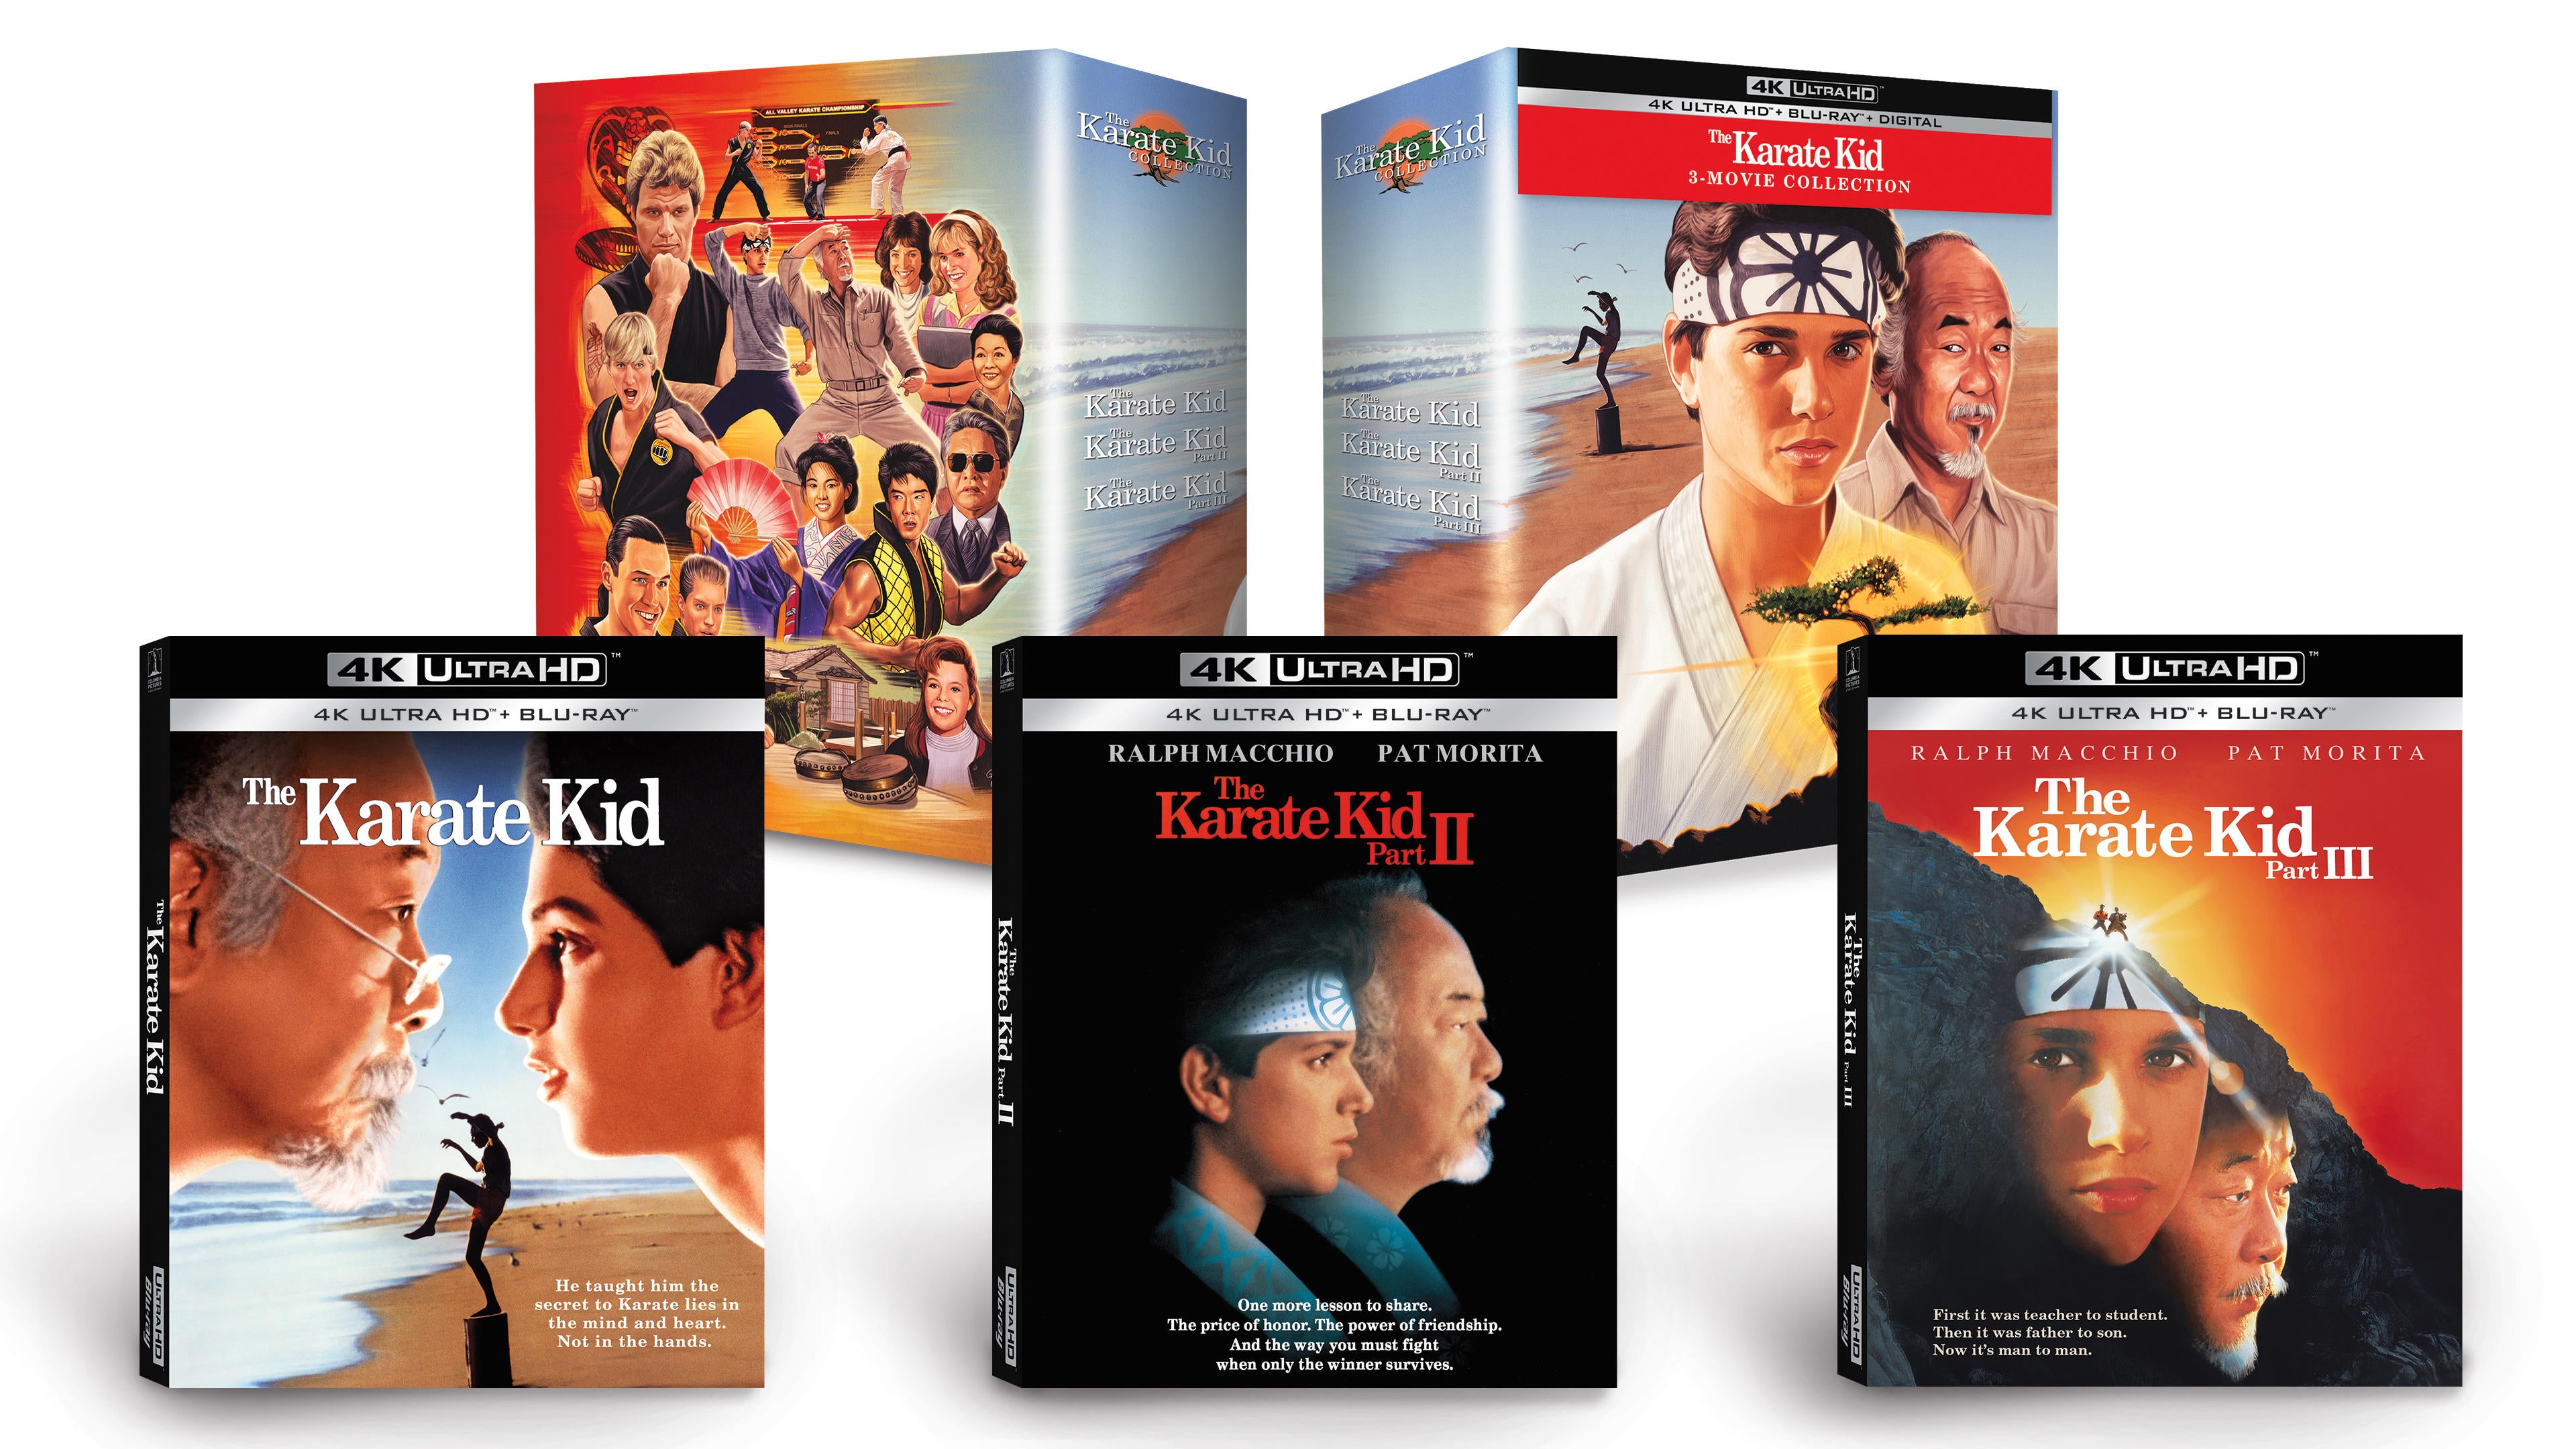 The Karate Kid Collection 4K UHD Blu-ray Box Set Got a Massive 